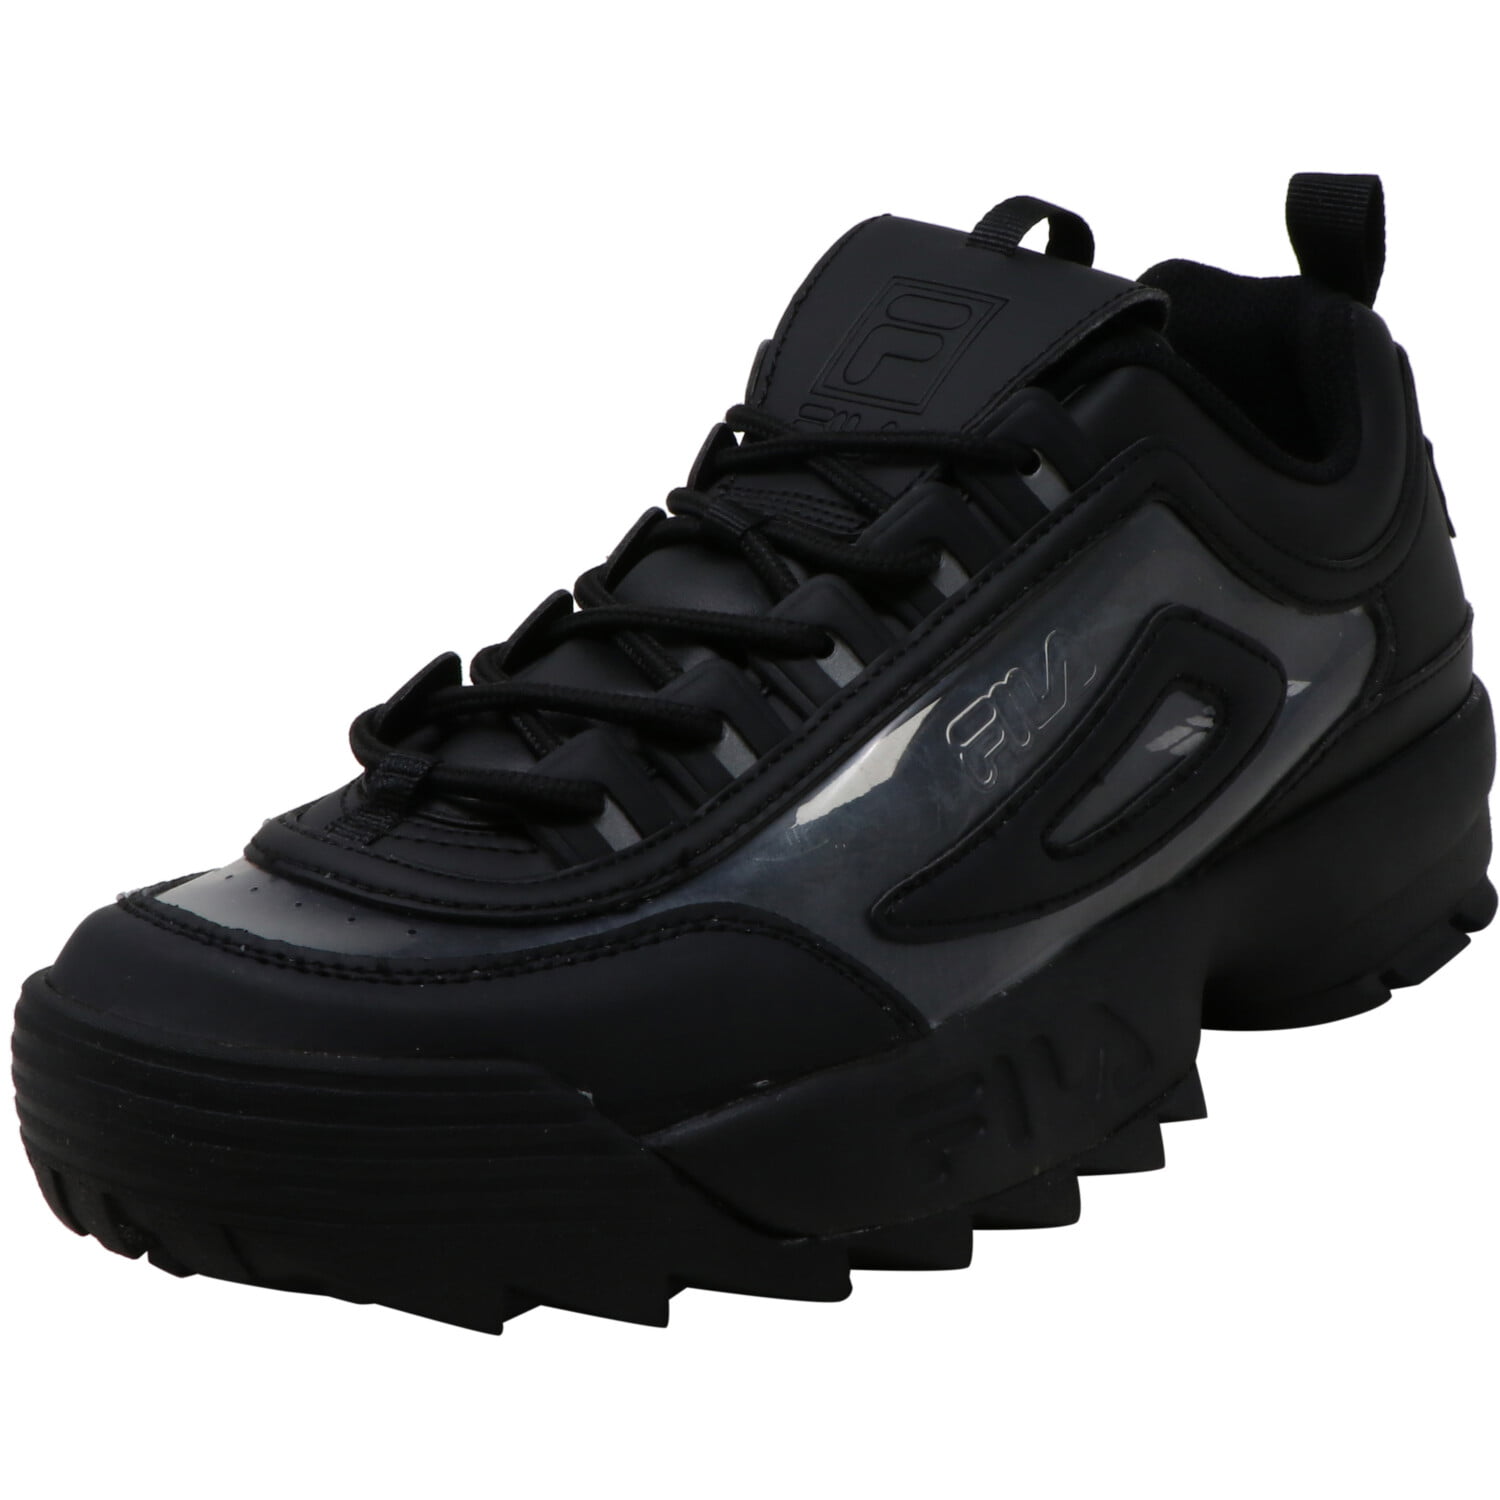 Fila Women's Ii Black / Ankle-High Wedge Sneakers - 8.5M Walmart.com